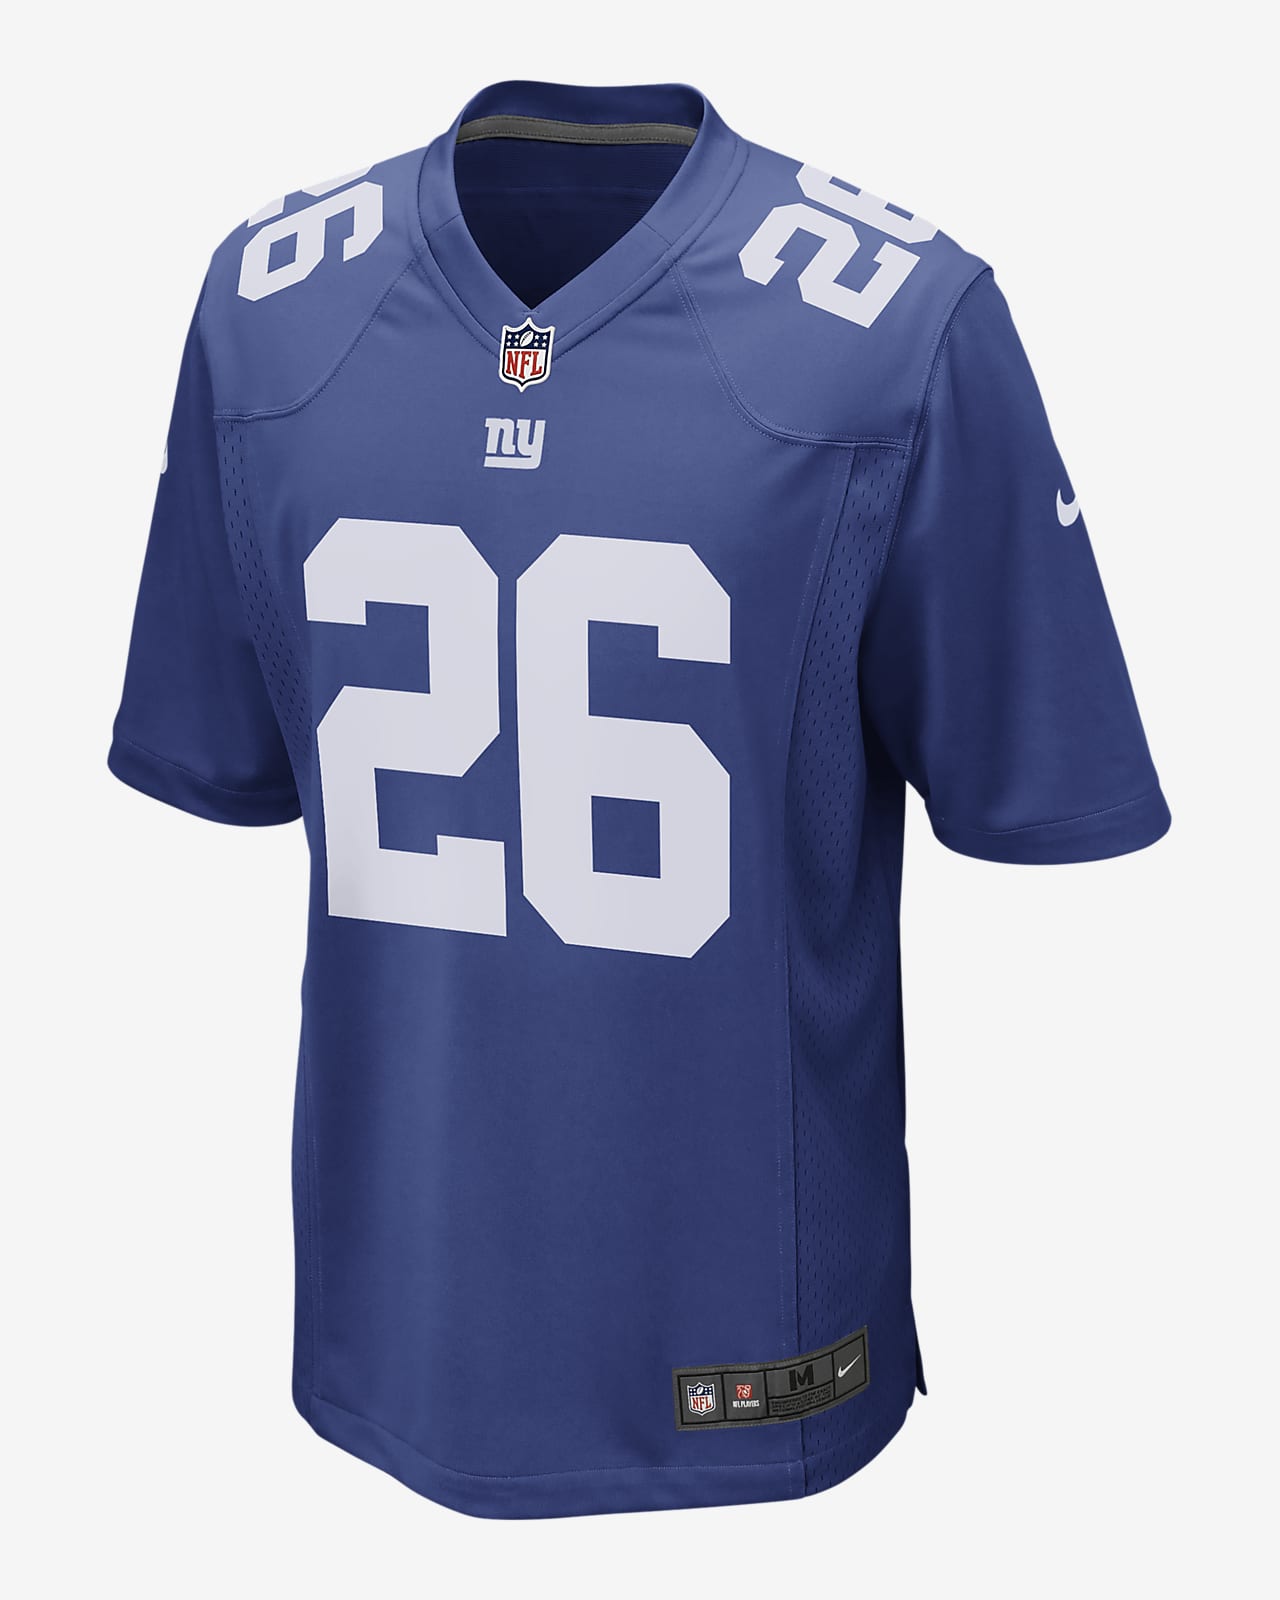 NFL New York Giants (Saquon Barkley) American-Football-Spieltrikot für Herren